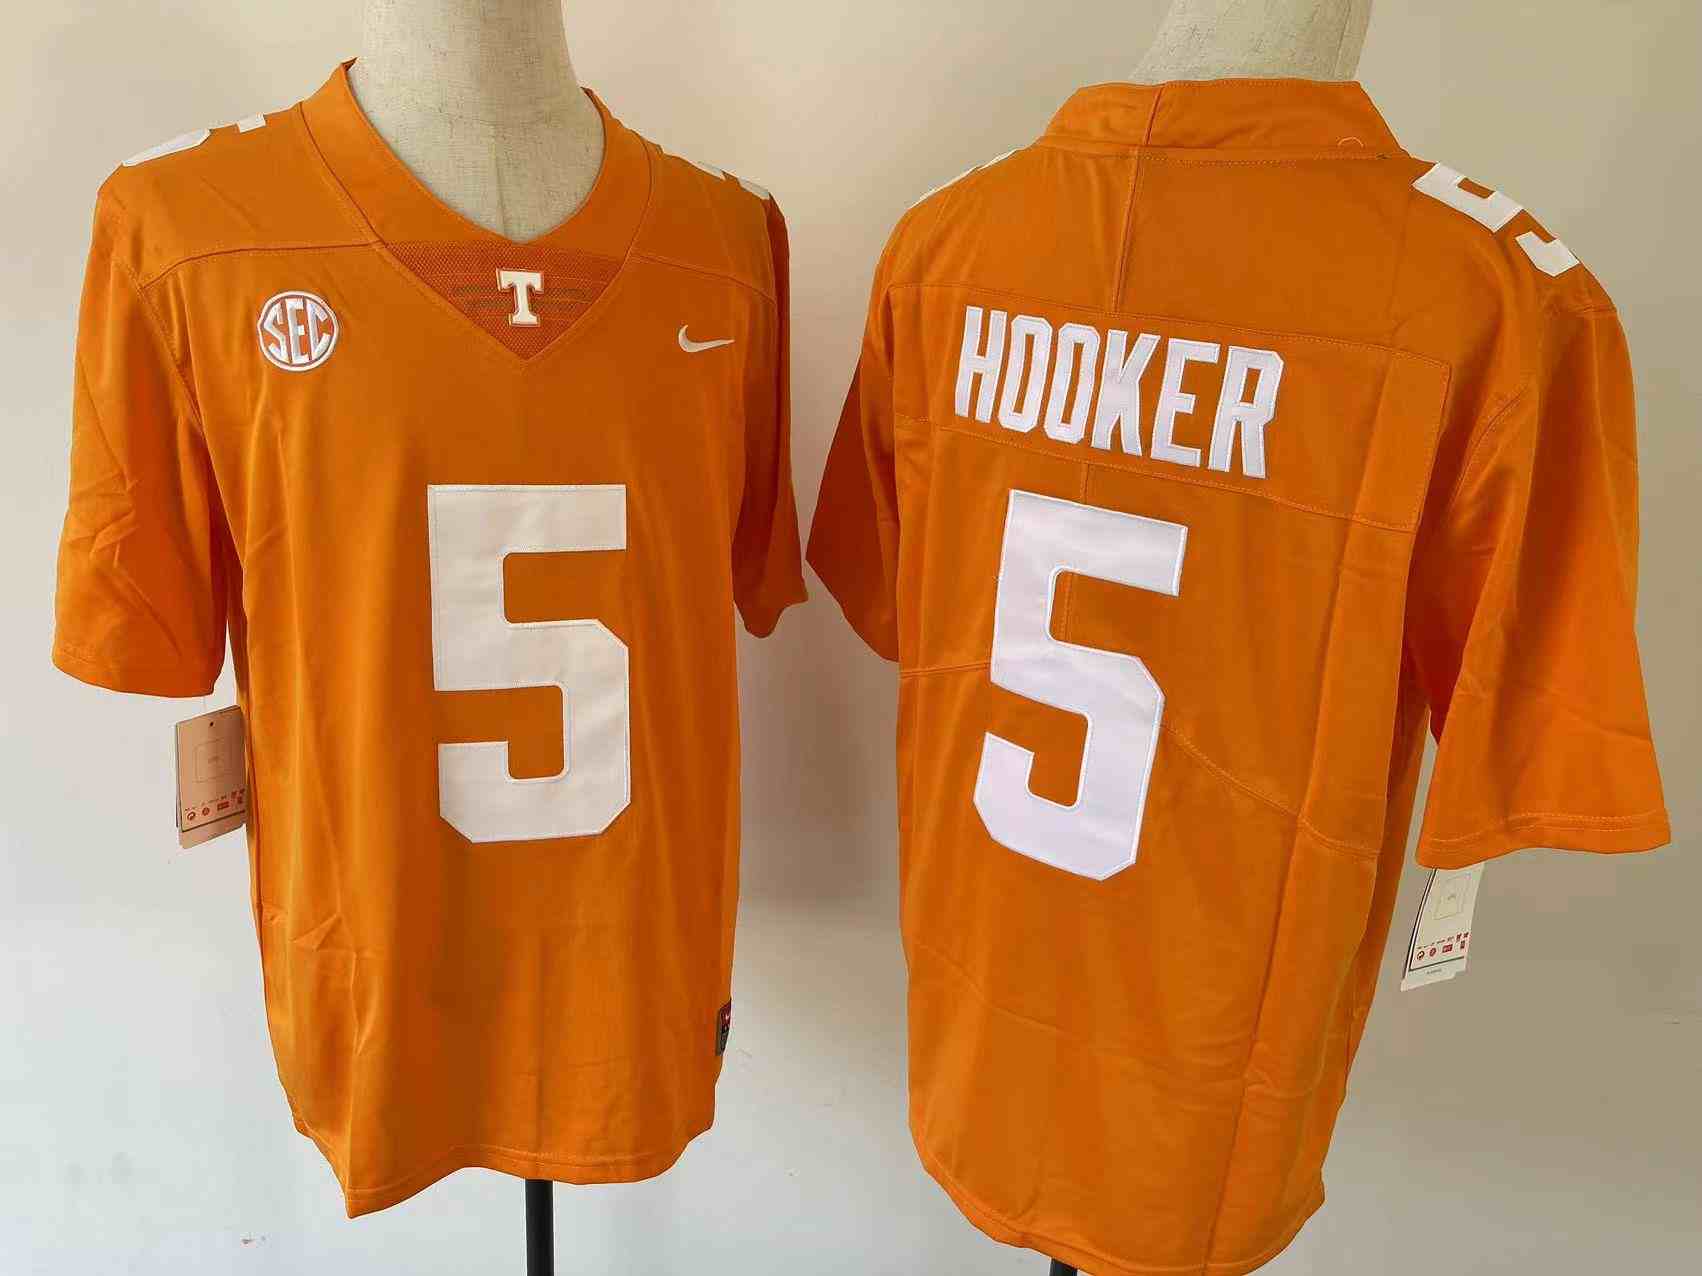 Youth Tennessee Volunteers Orange #5 HOOKER College Football Jersey